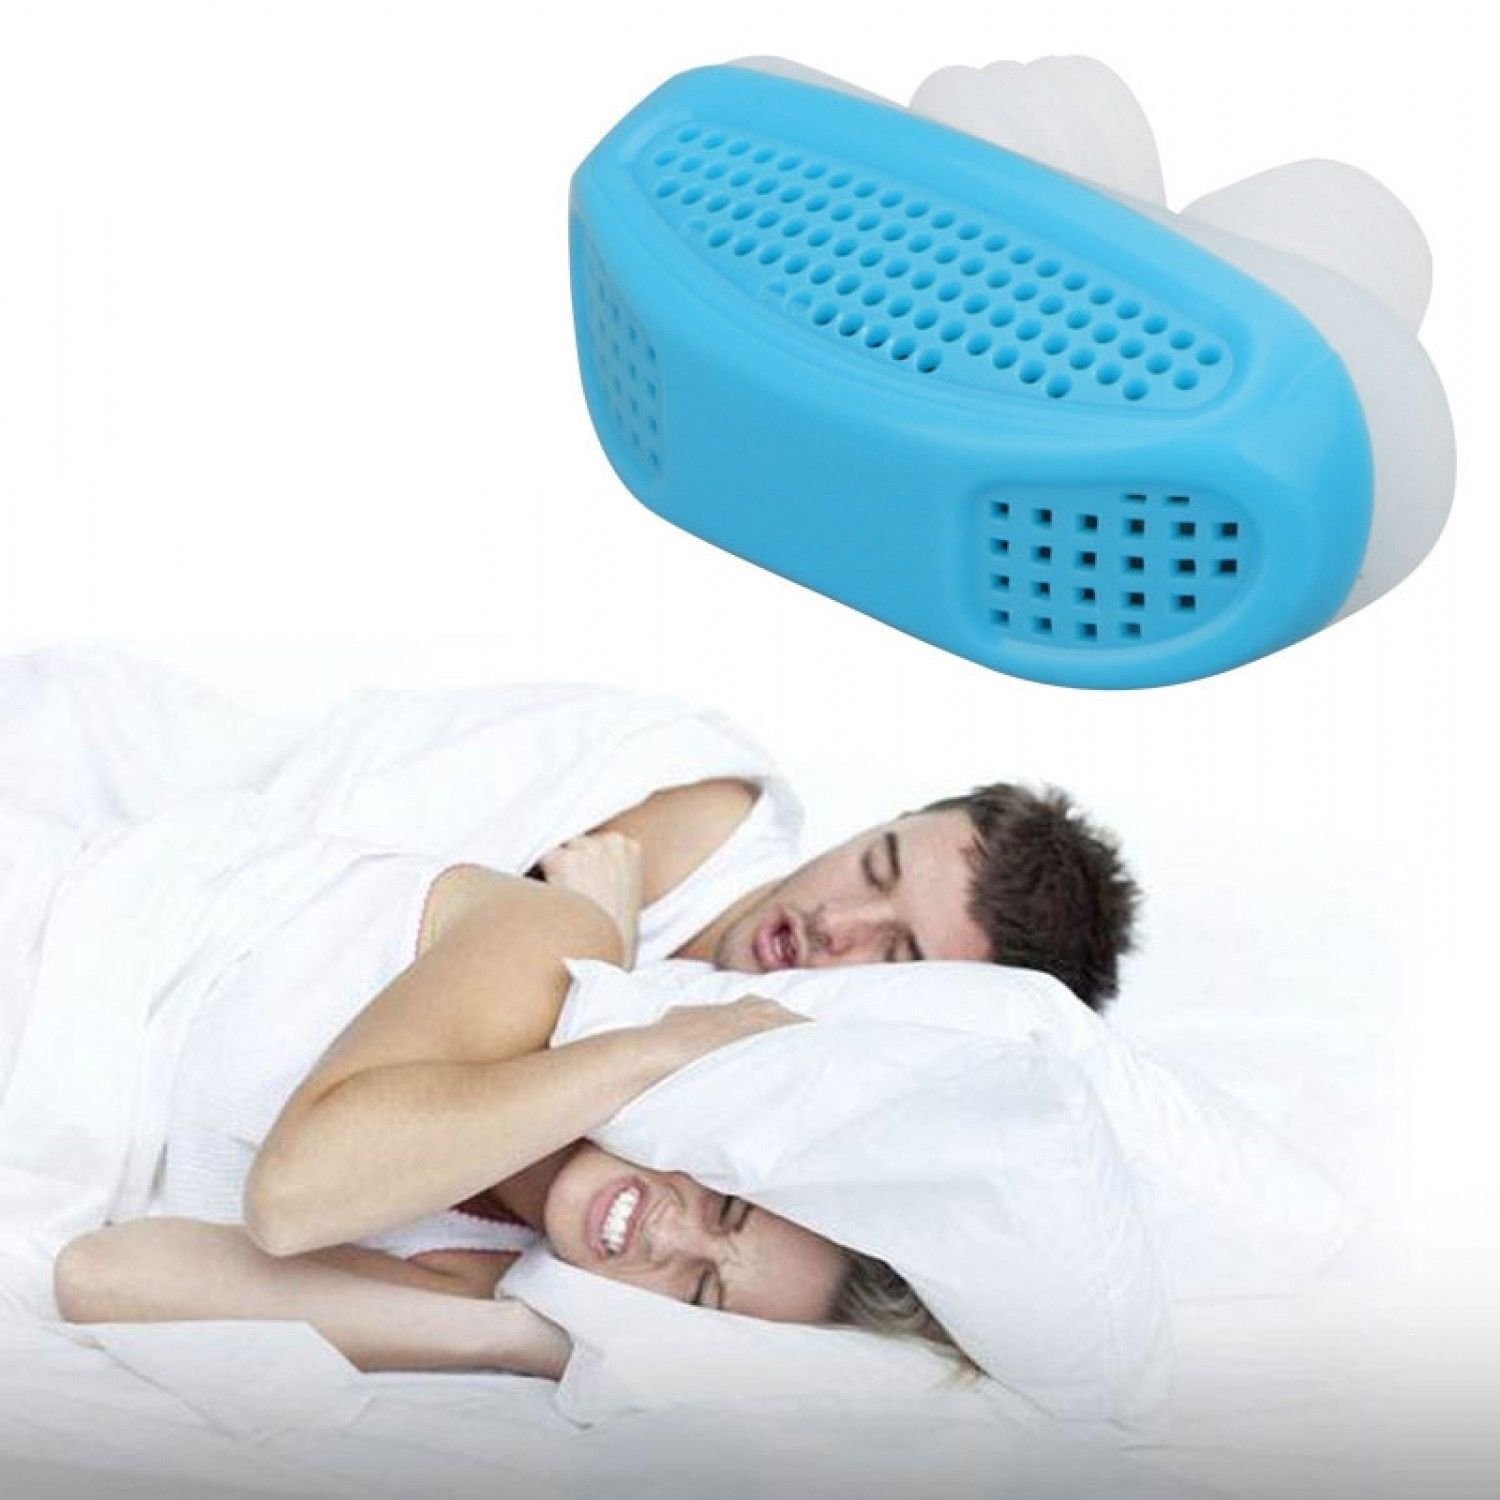 Airing Micro CPAP Nose Clip Device (Cordless) For Sleep Apnea Sleeping Aids